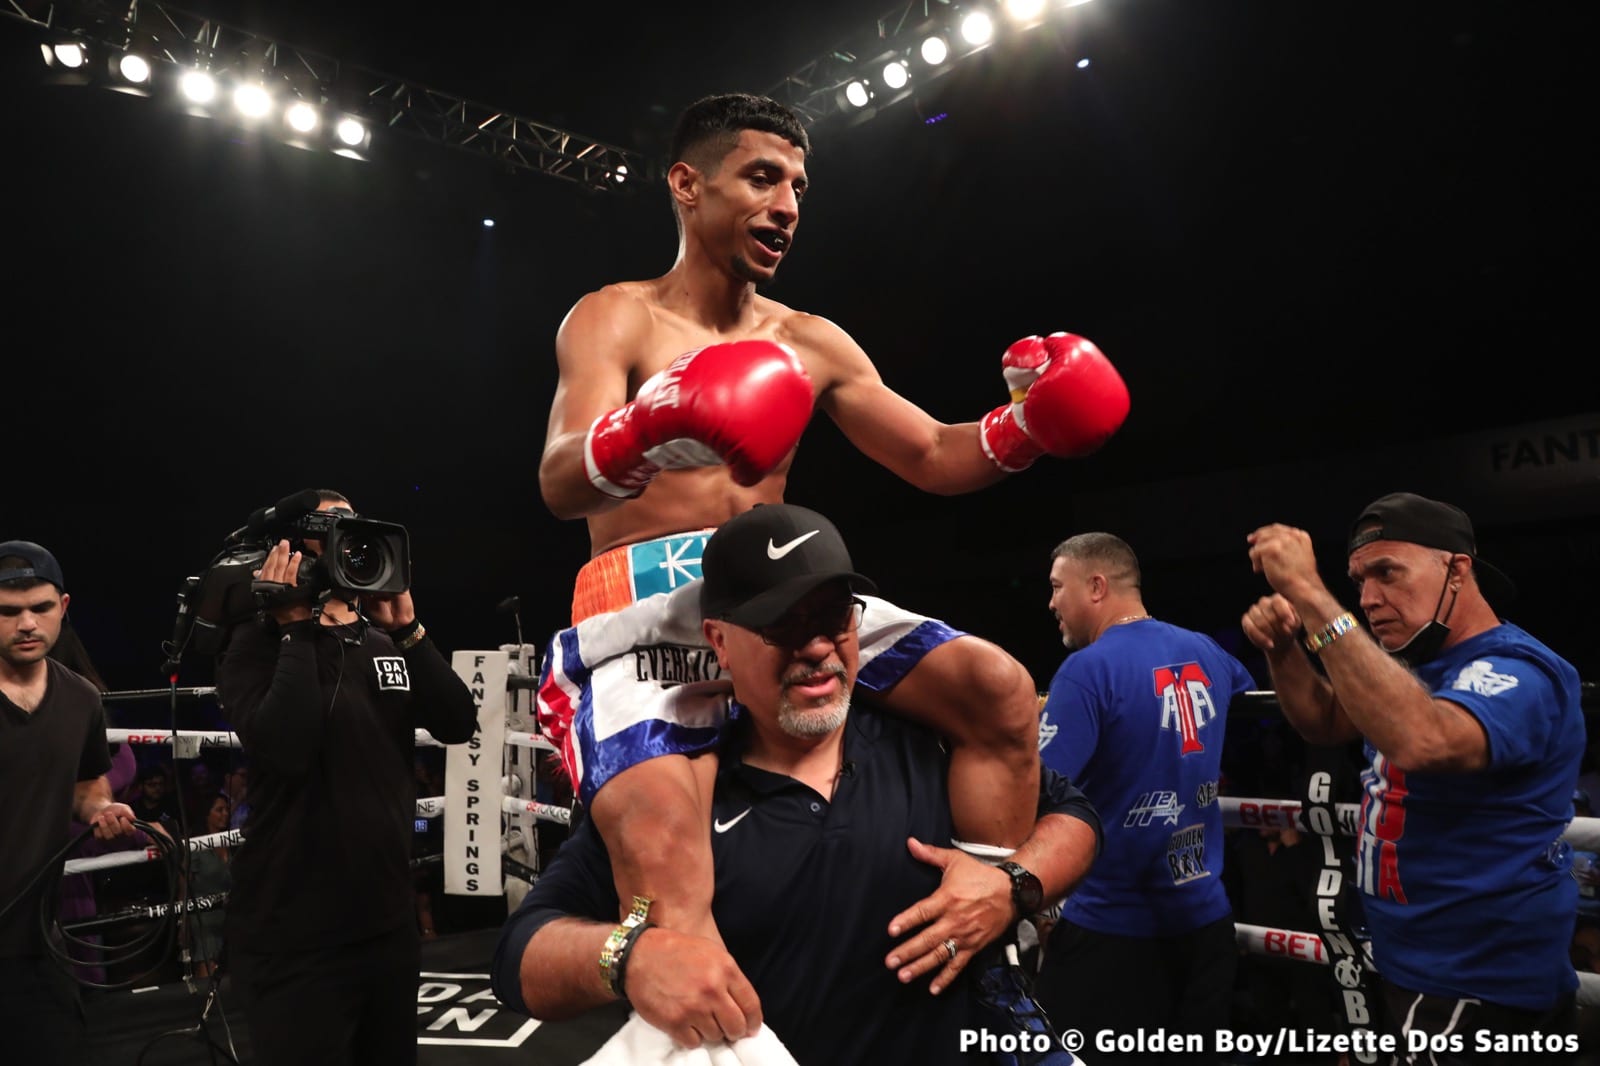 "Tito" Acosta Defeats Rivera Via First Round KO - Boxing Results